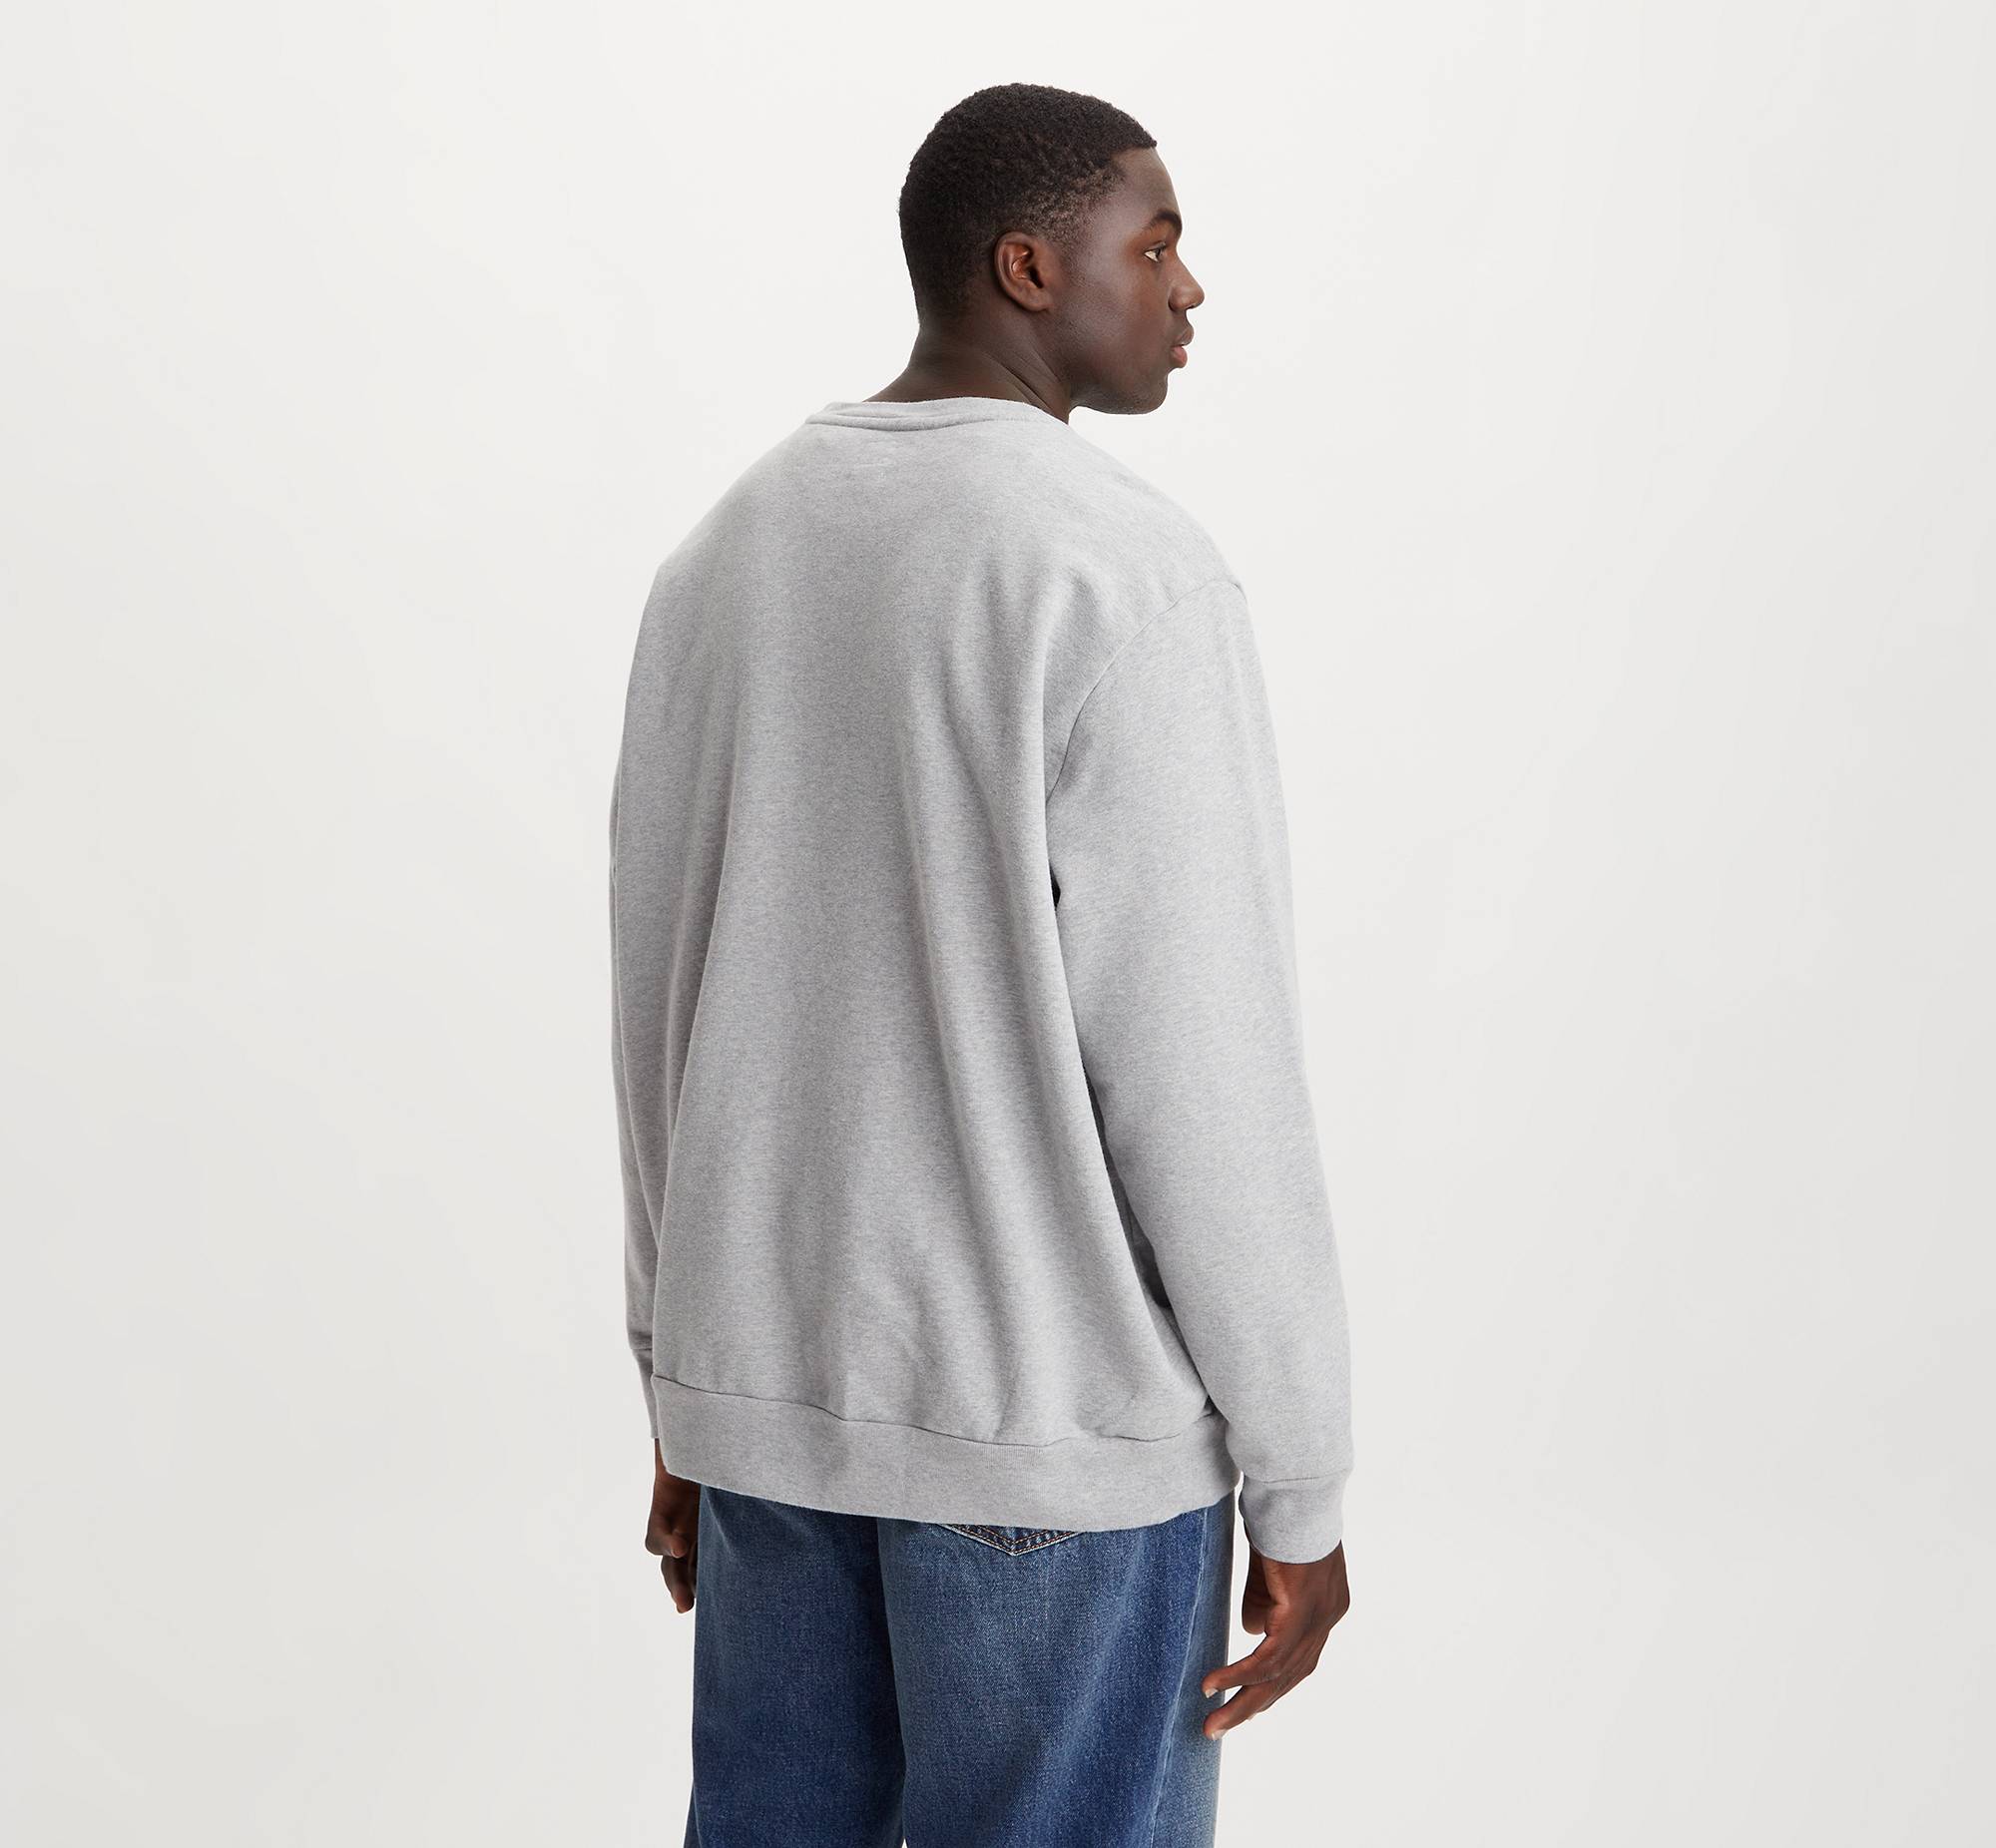 Graphic Crewneck Sweatshirt (Big & Tall) 2